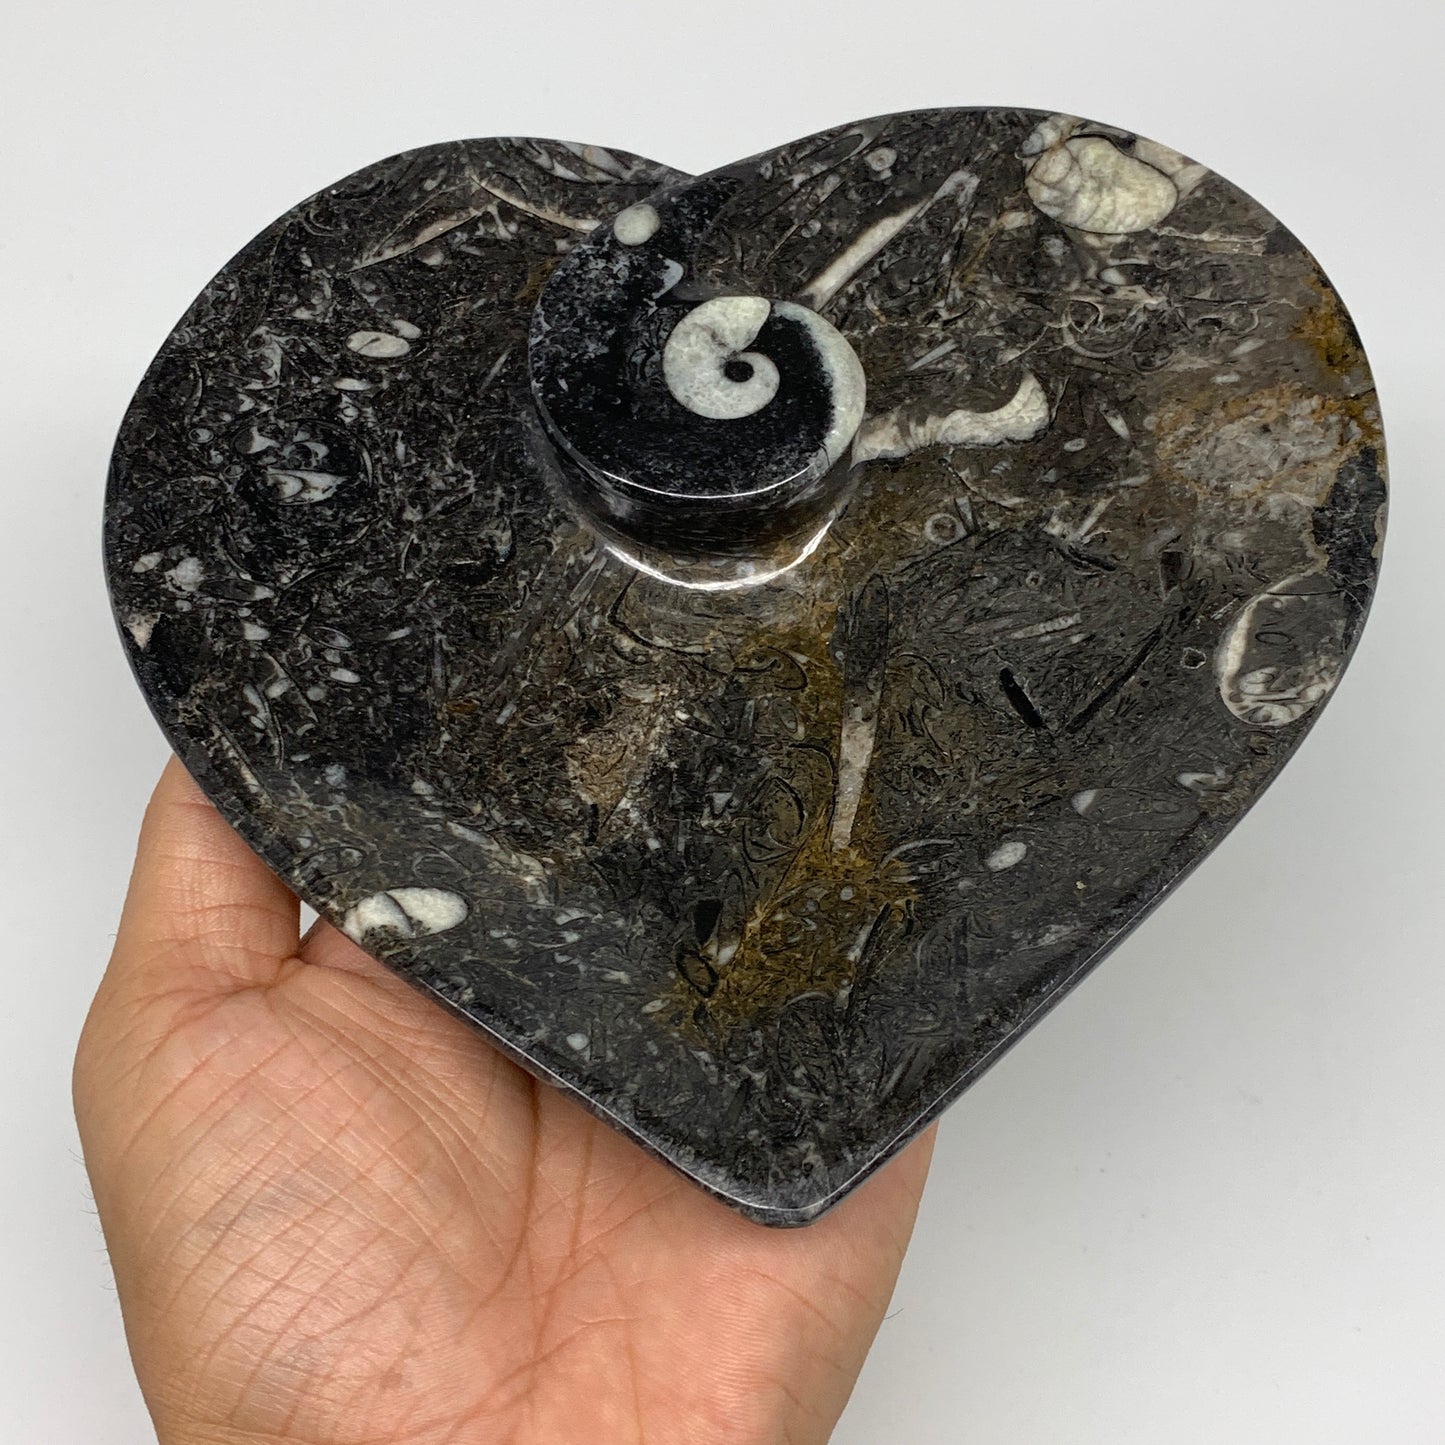 2pcs Set, 6.25"x6.25" Heart Fossils Orthoceras Ammonite Bowls @Morocco, B8478